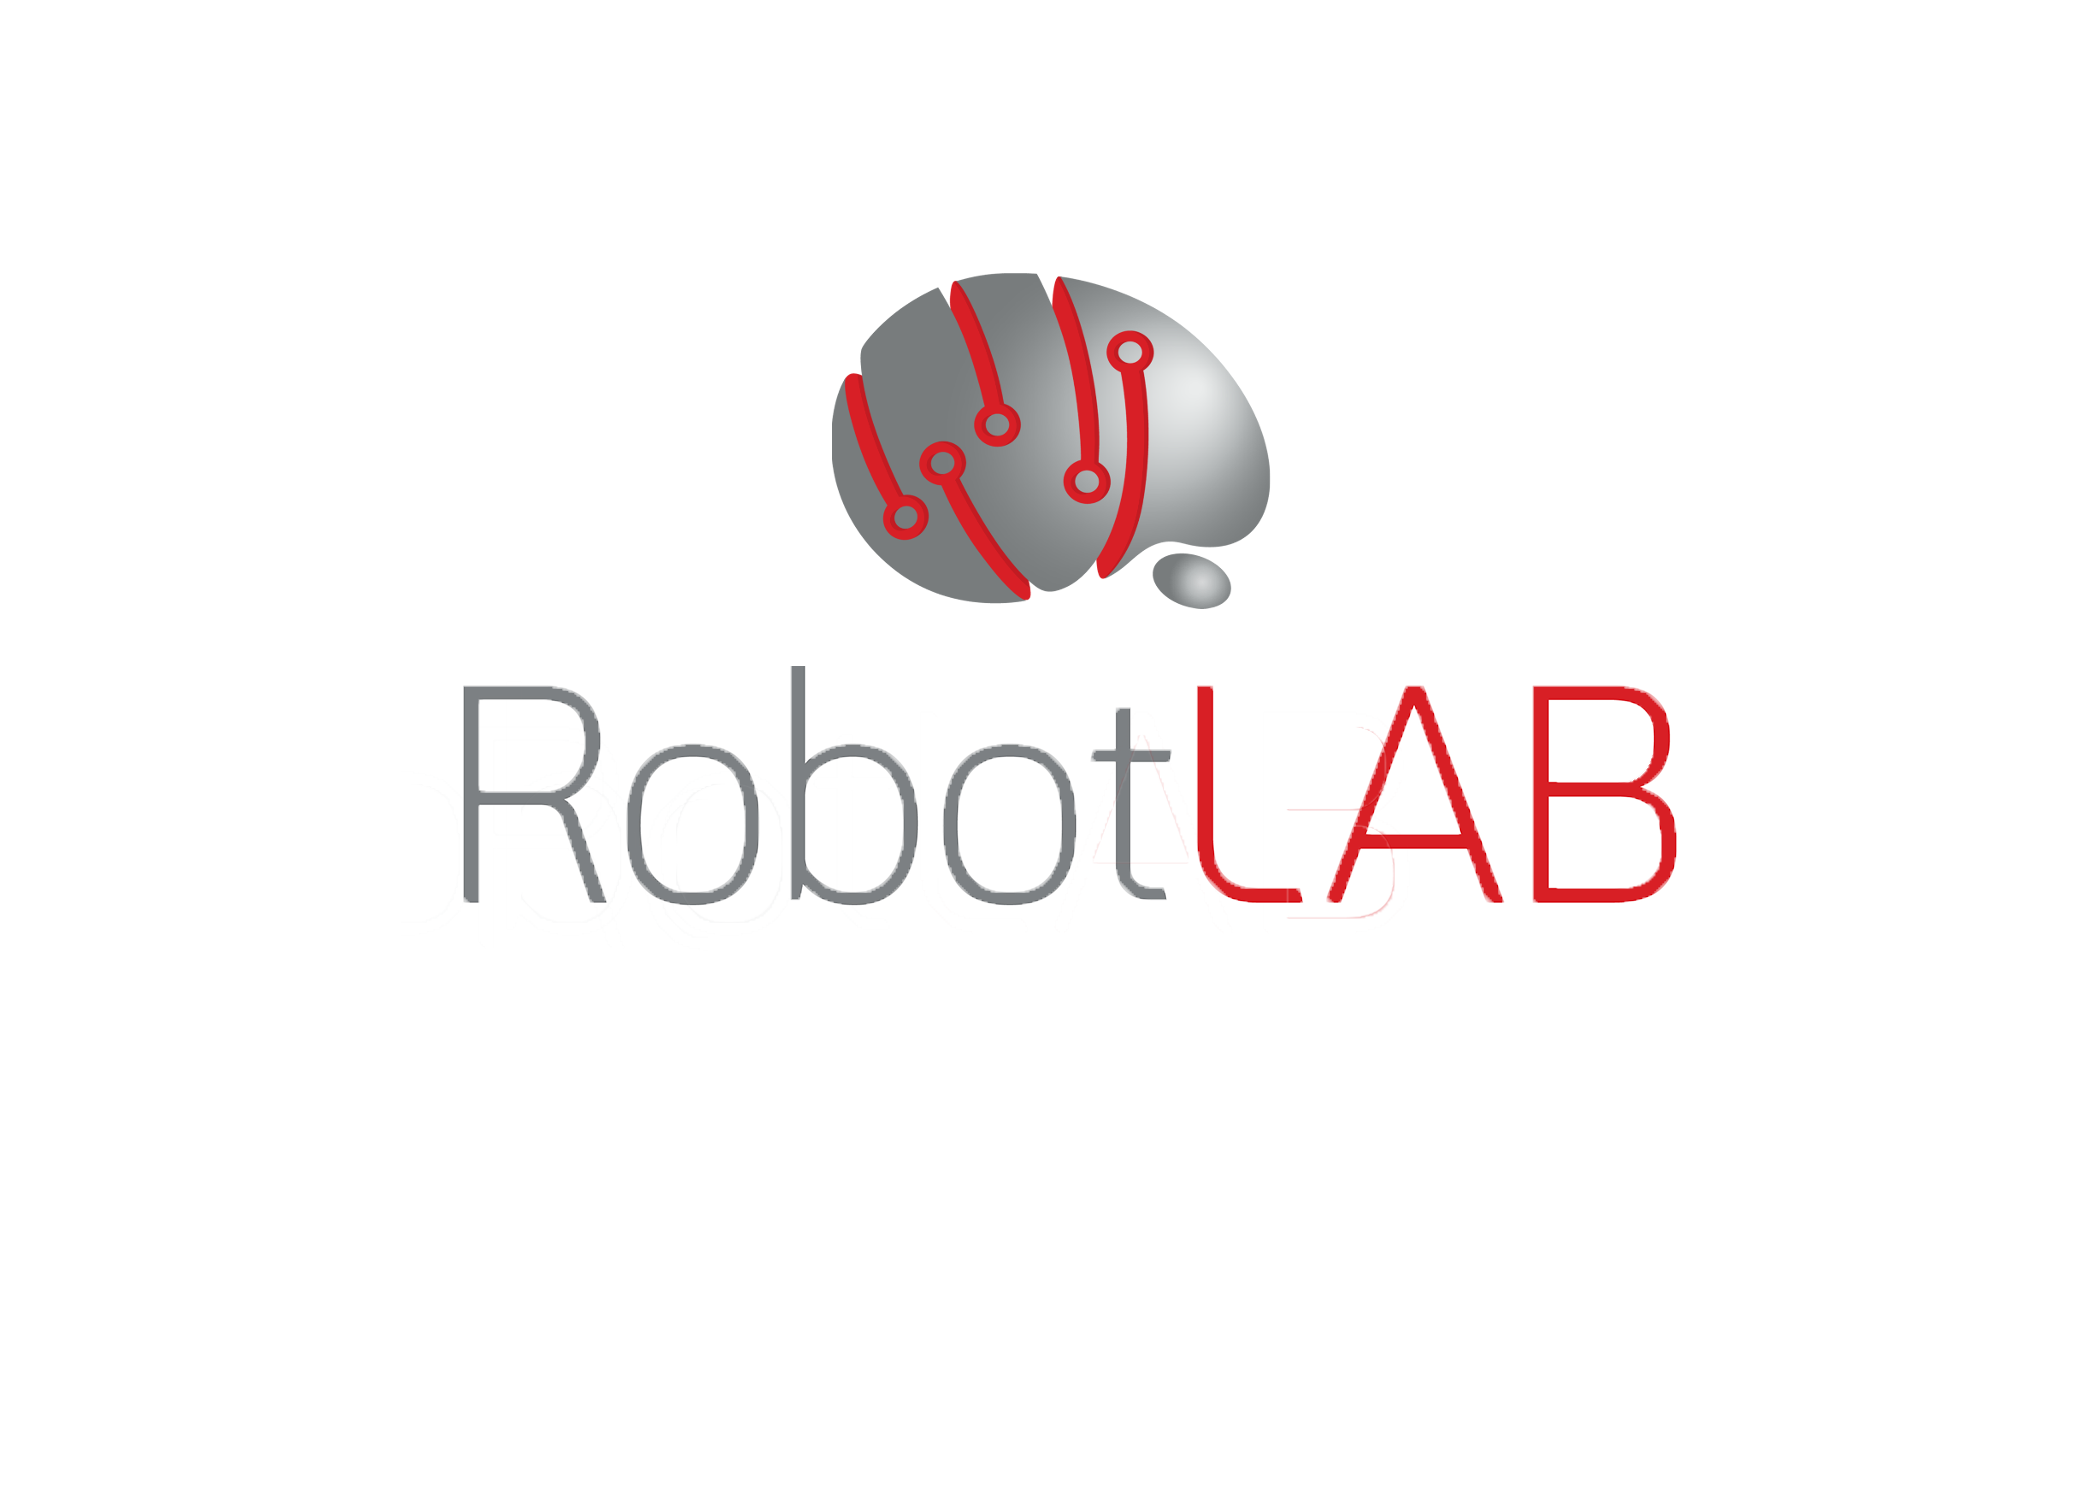 RobotLAB logo